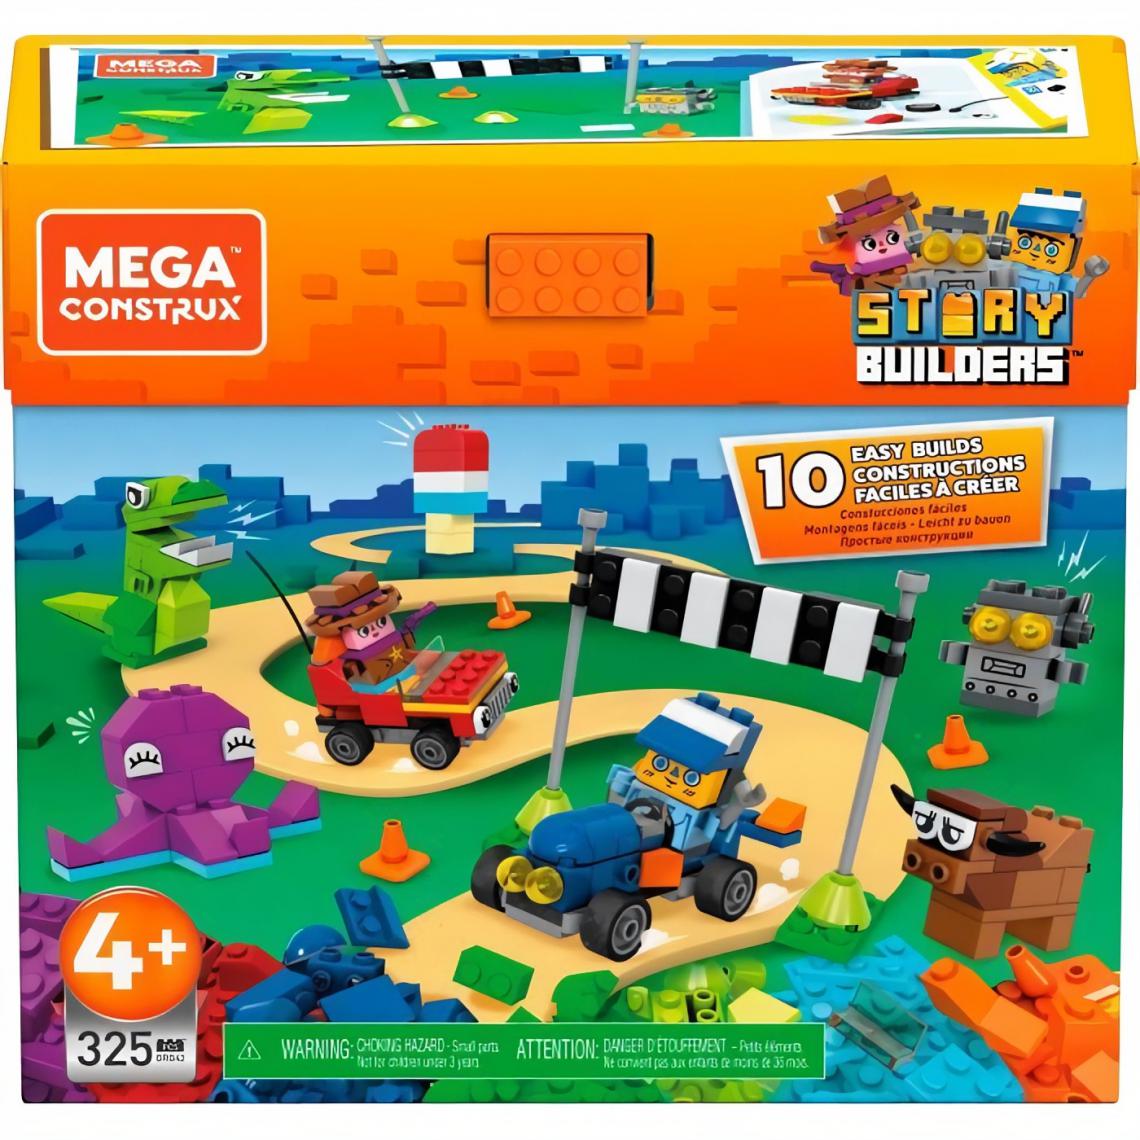 Mega Construx - MEGA CONSTRUX Story Builders Ultimate Storybox - 390 blocs - 4 ans et + - Briques et blocs